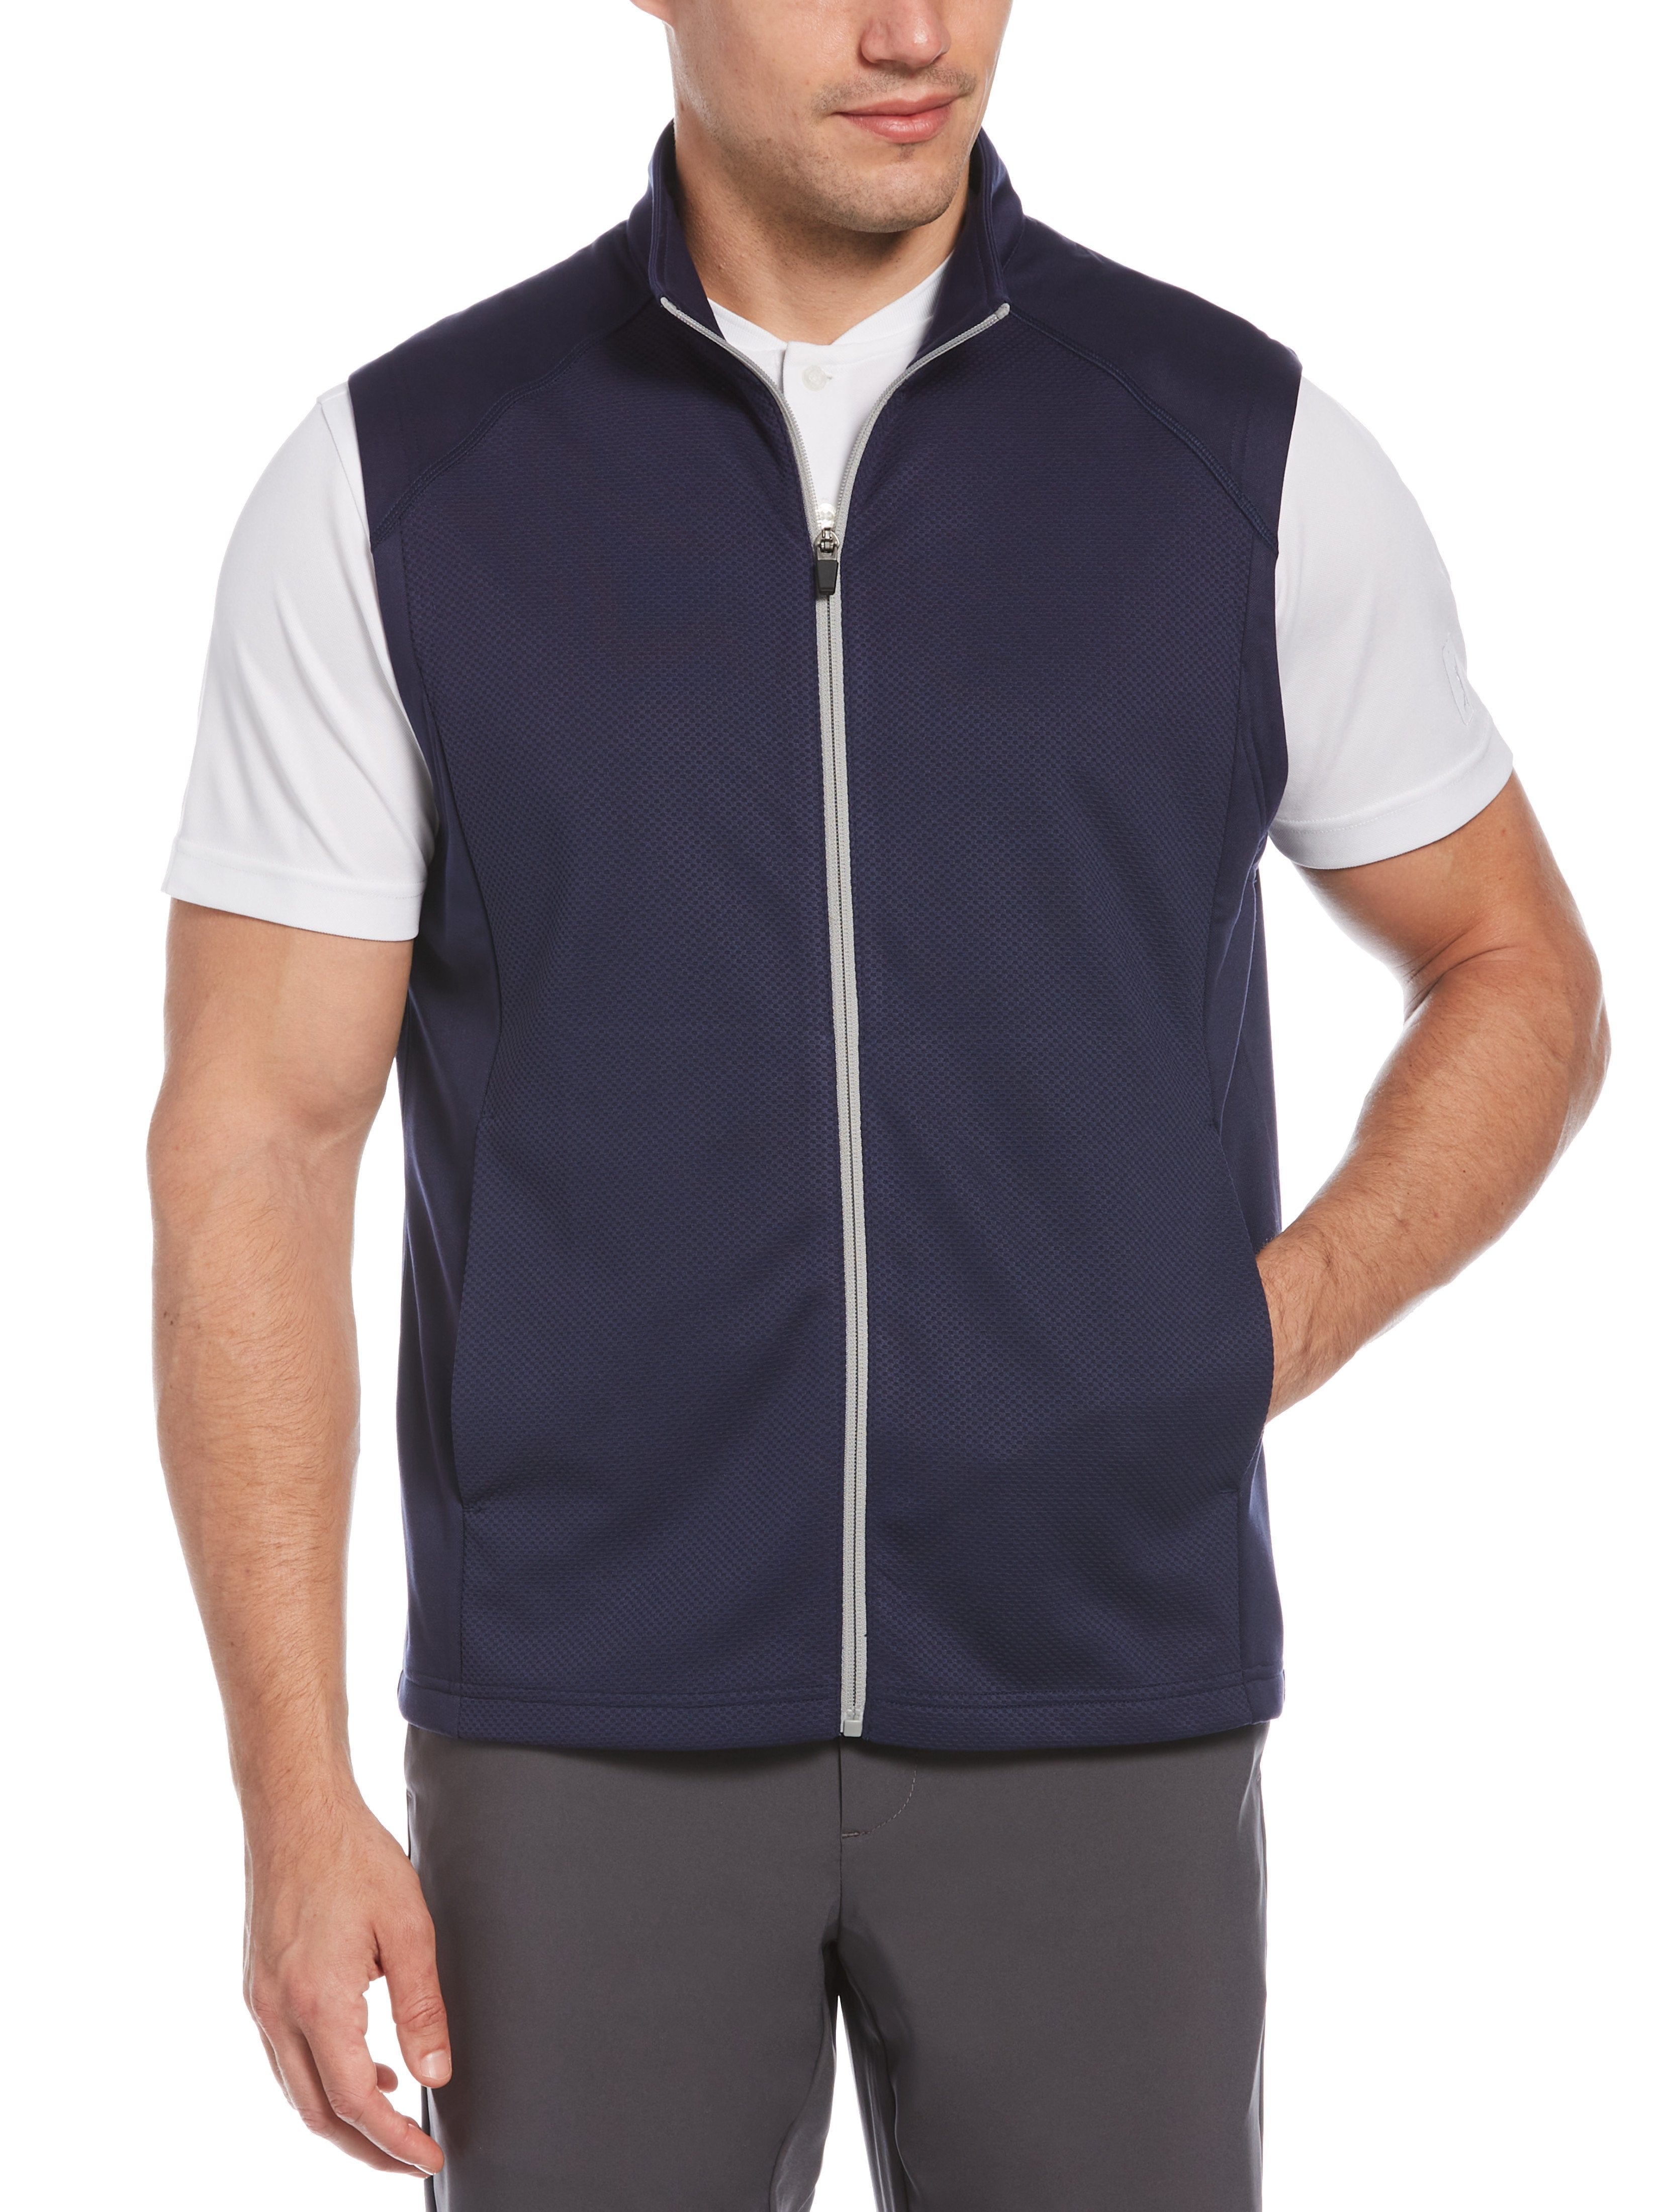 PGA TOUR Apparel Mens Mixed Texture Fleece Golf Vest Top, Size 2XL, Navy Blue, 100% Polyester | Golf Apparel Shop